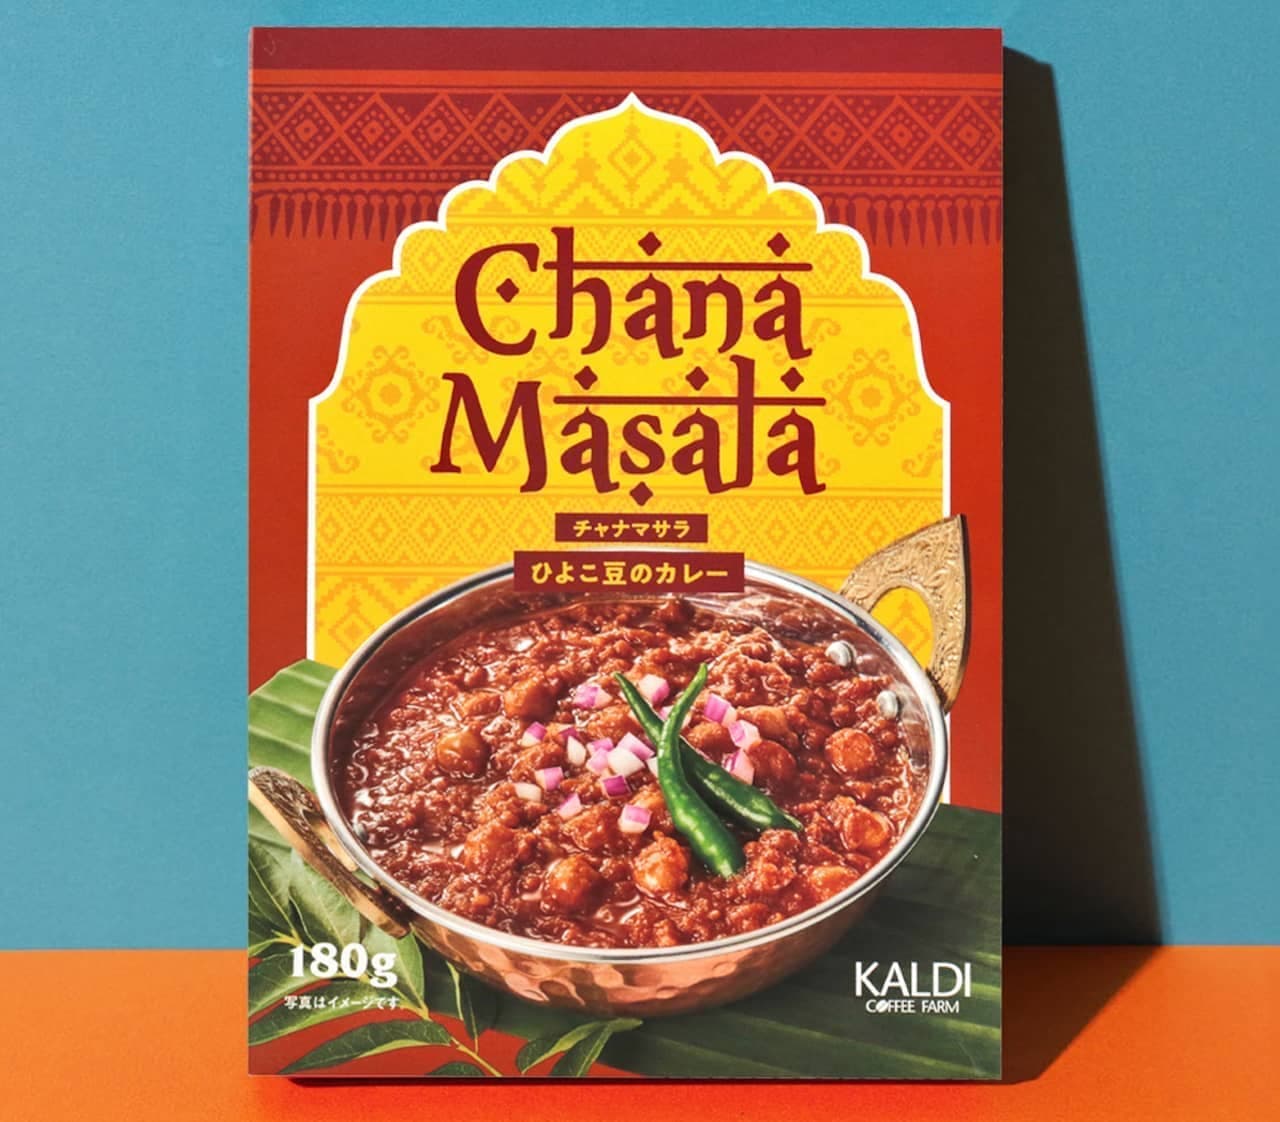 KALDI's "Original Indian Curry Chana Masala" renewed